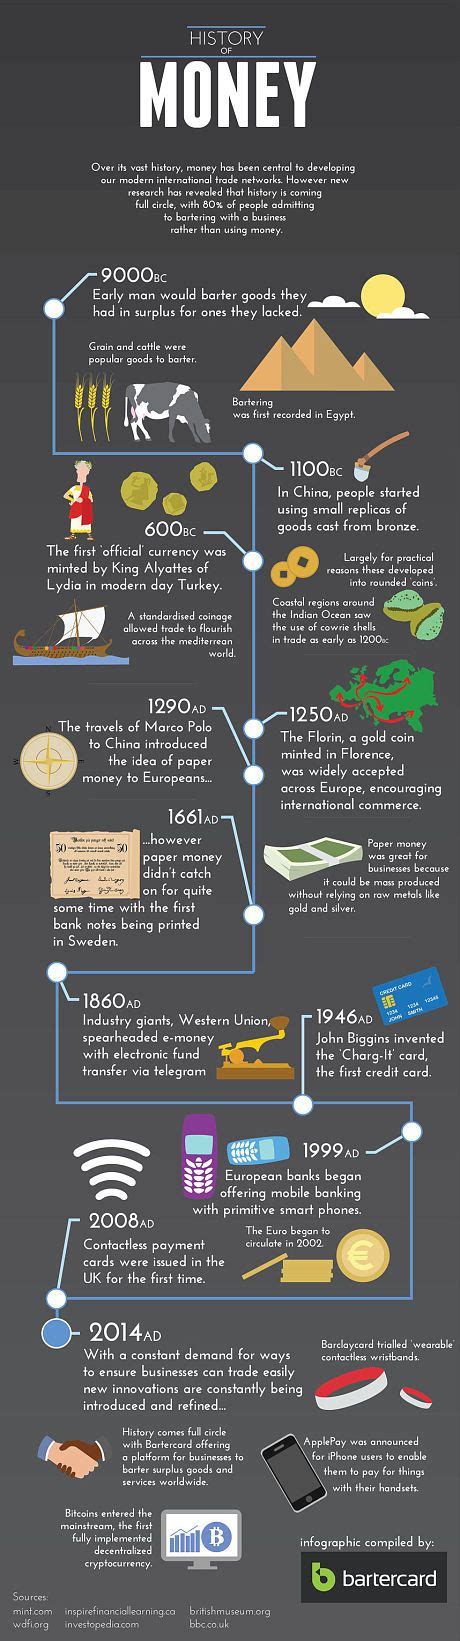 brief history of money